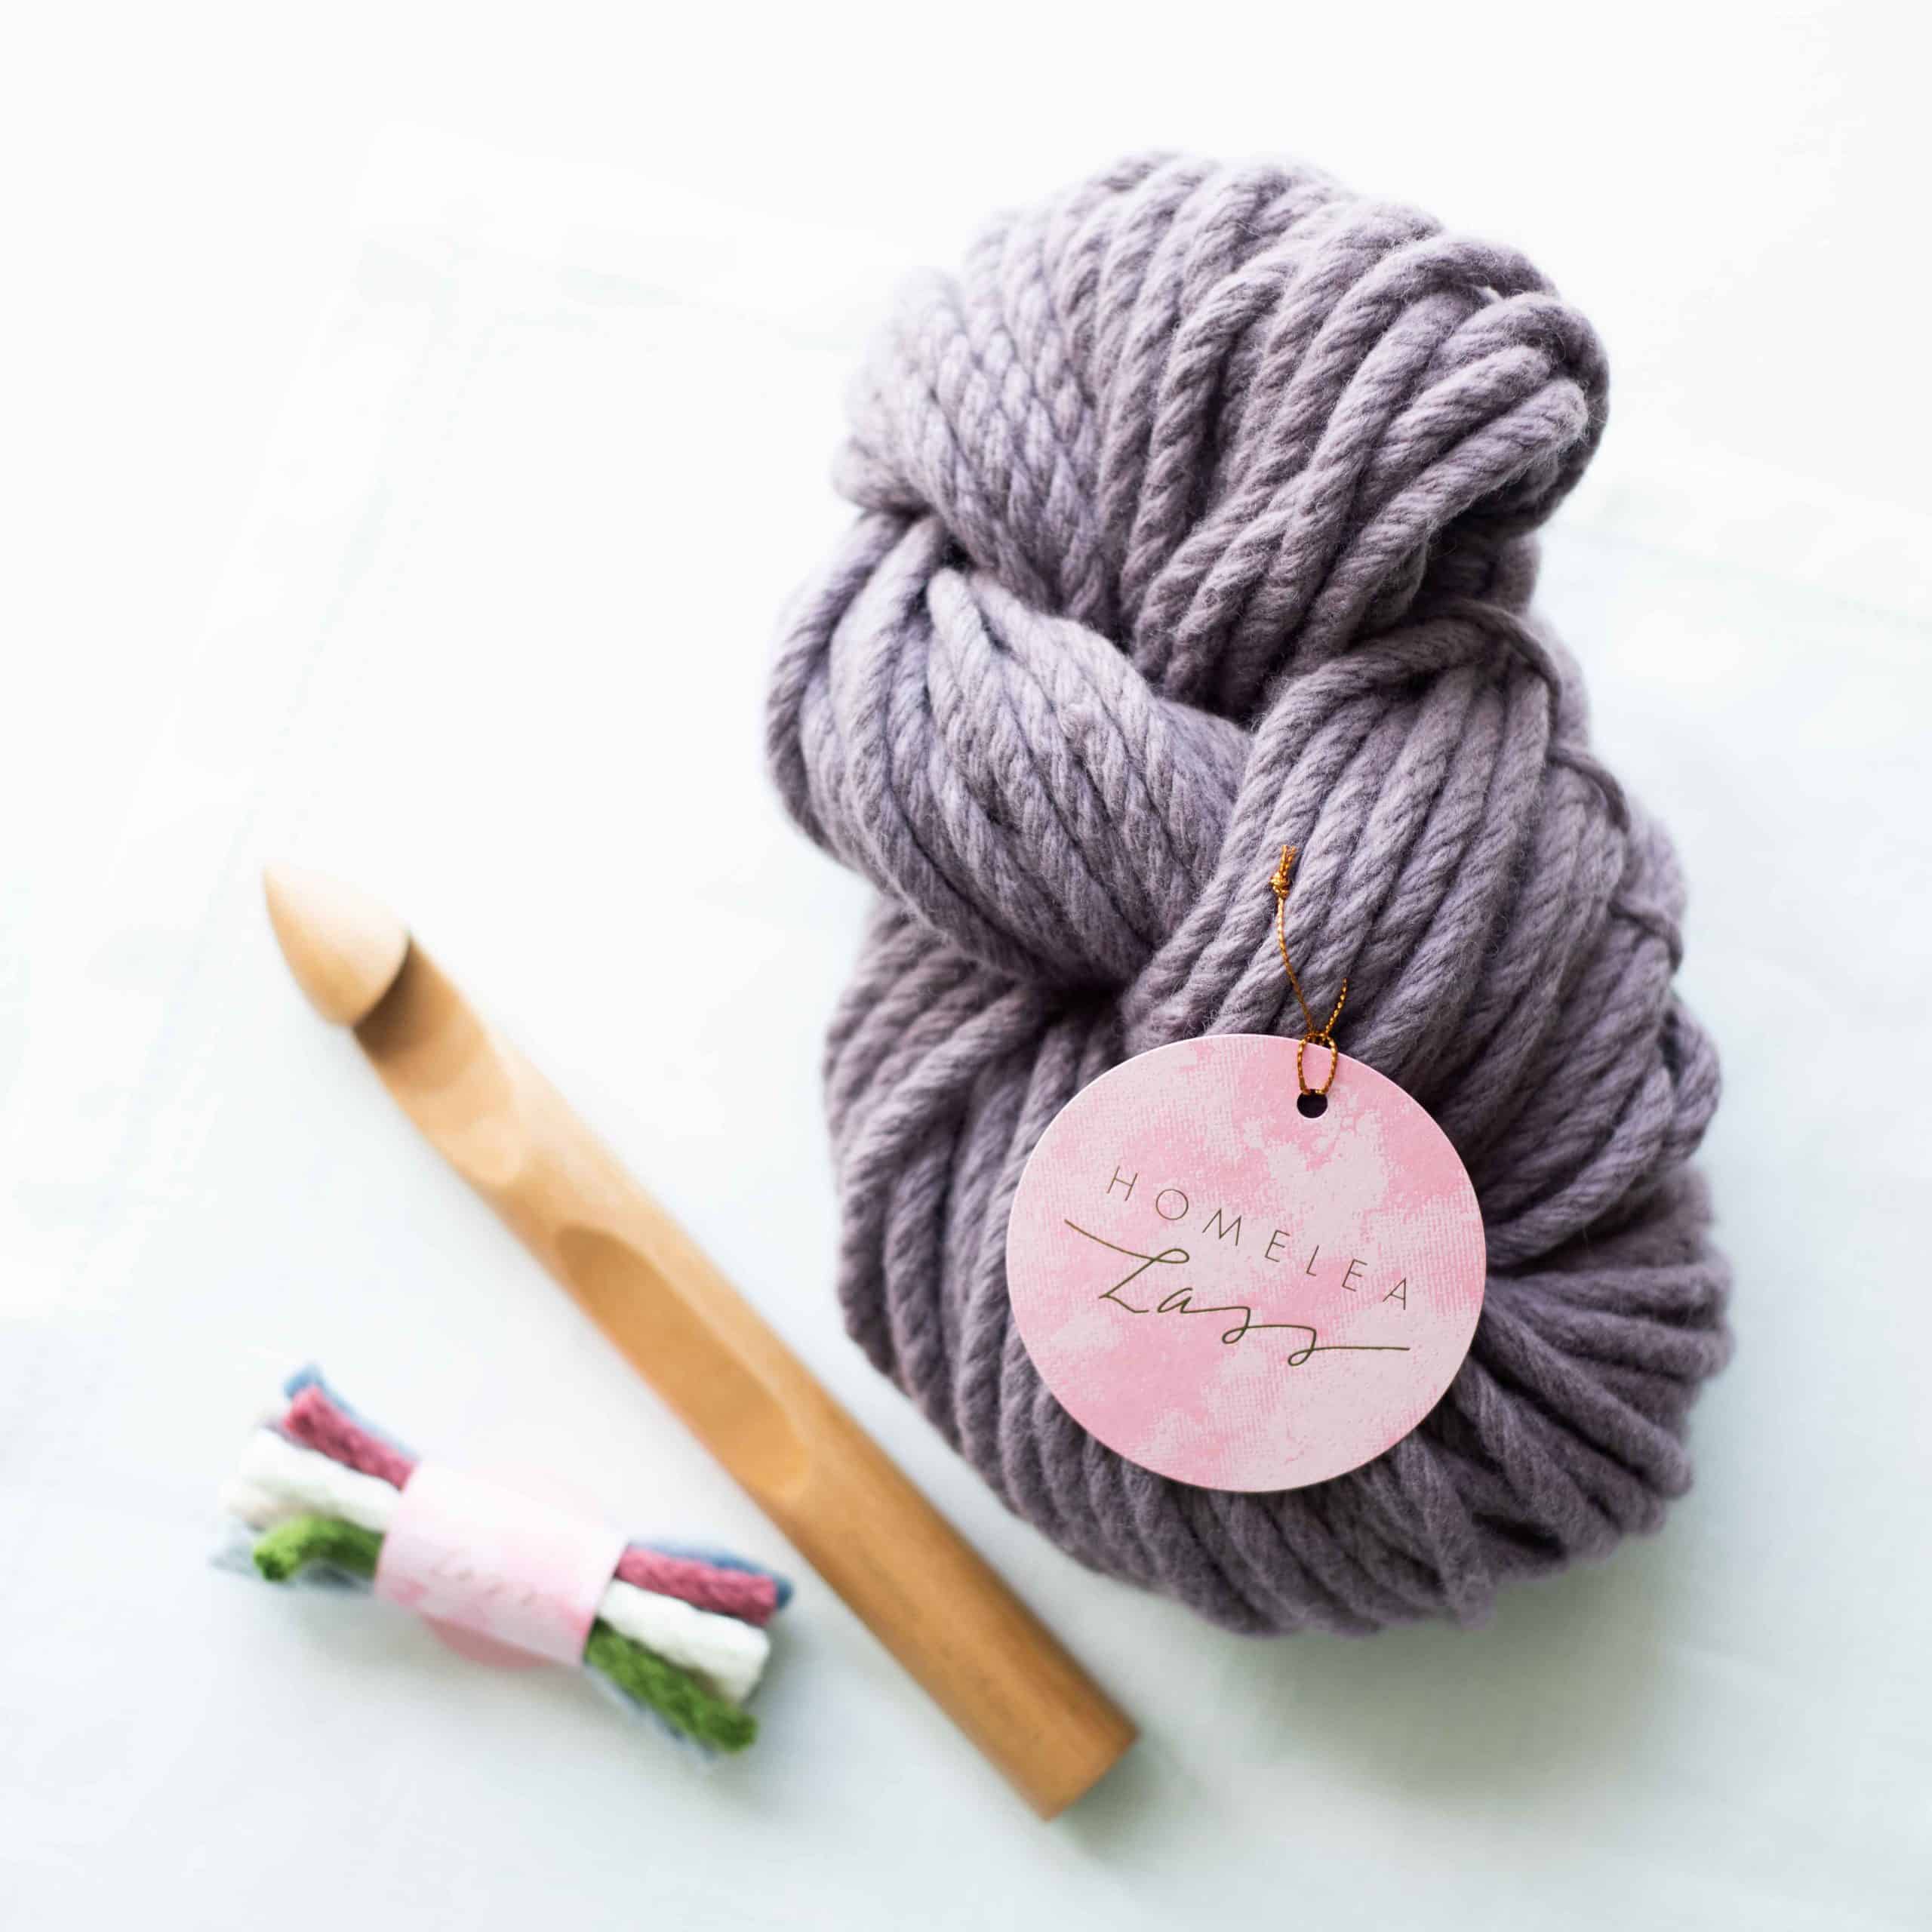 NEW: Happy Potholder Crochet Kit — Homelea Lass : Homelea Lass